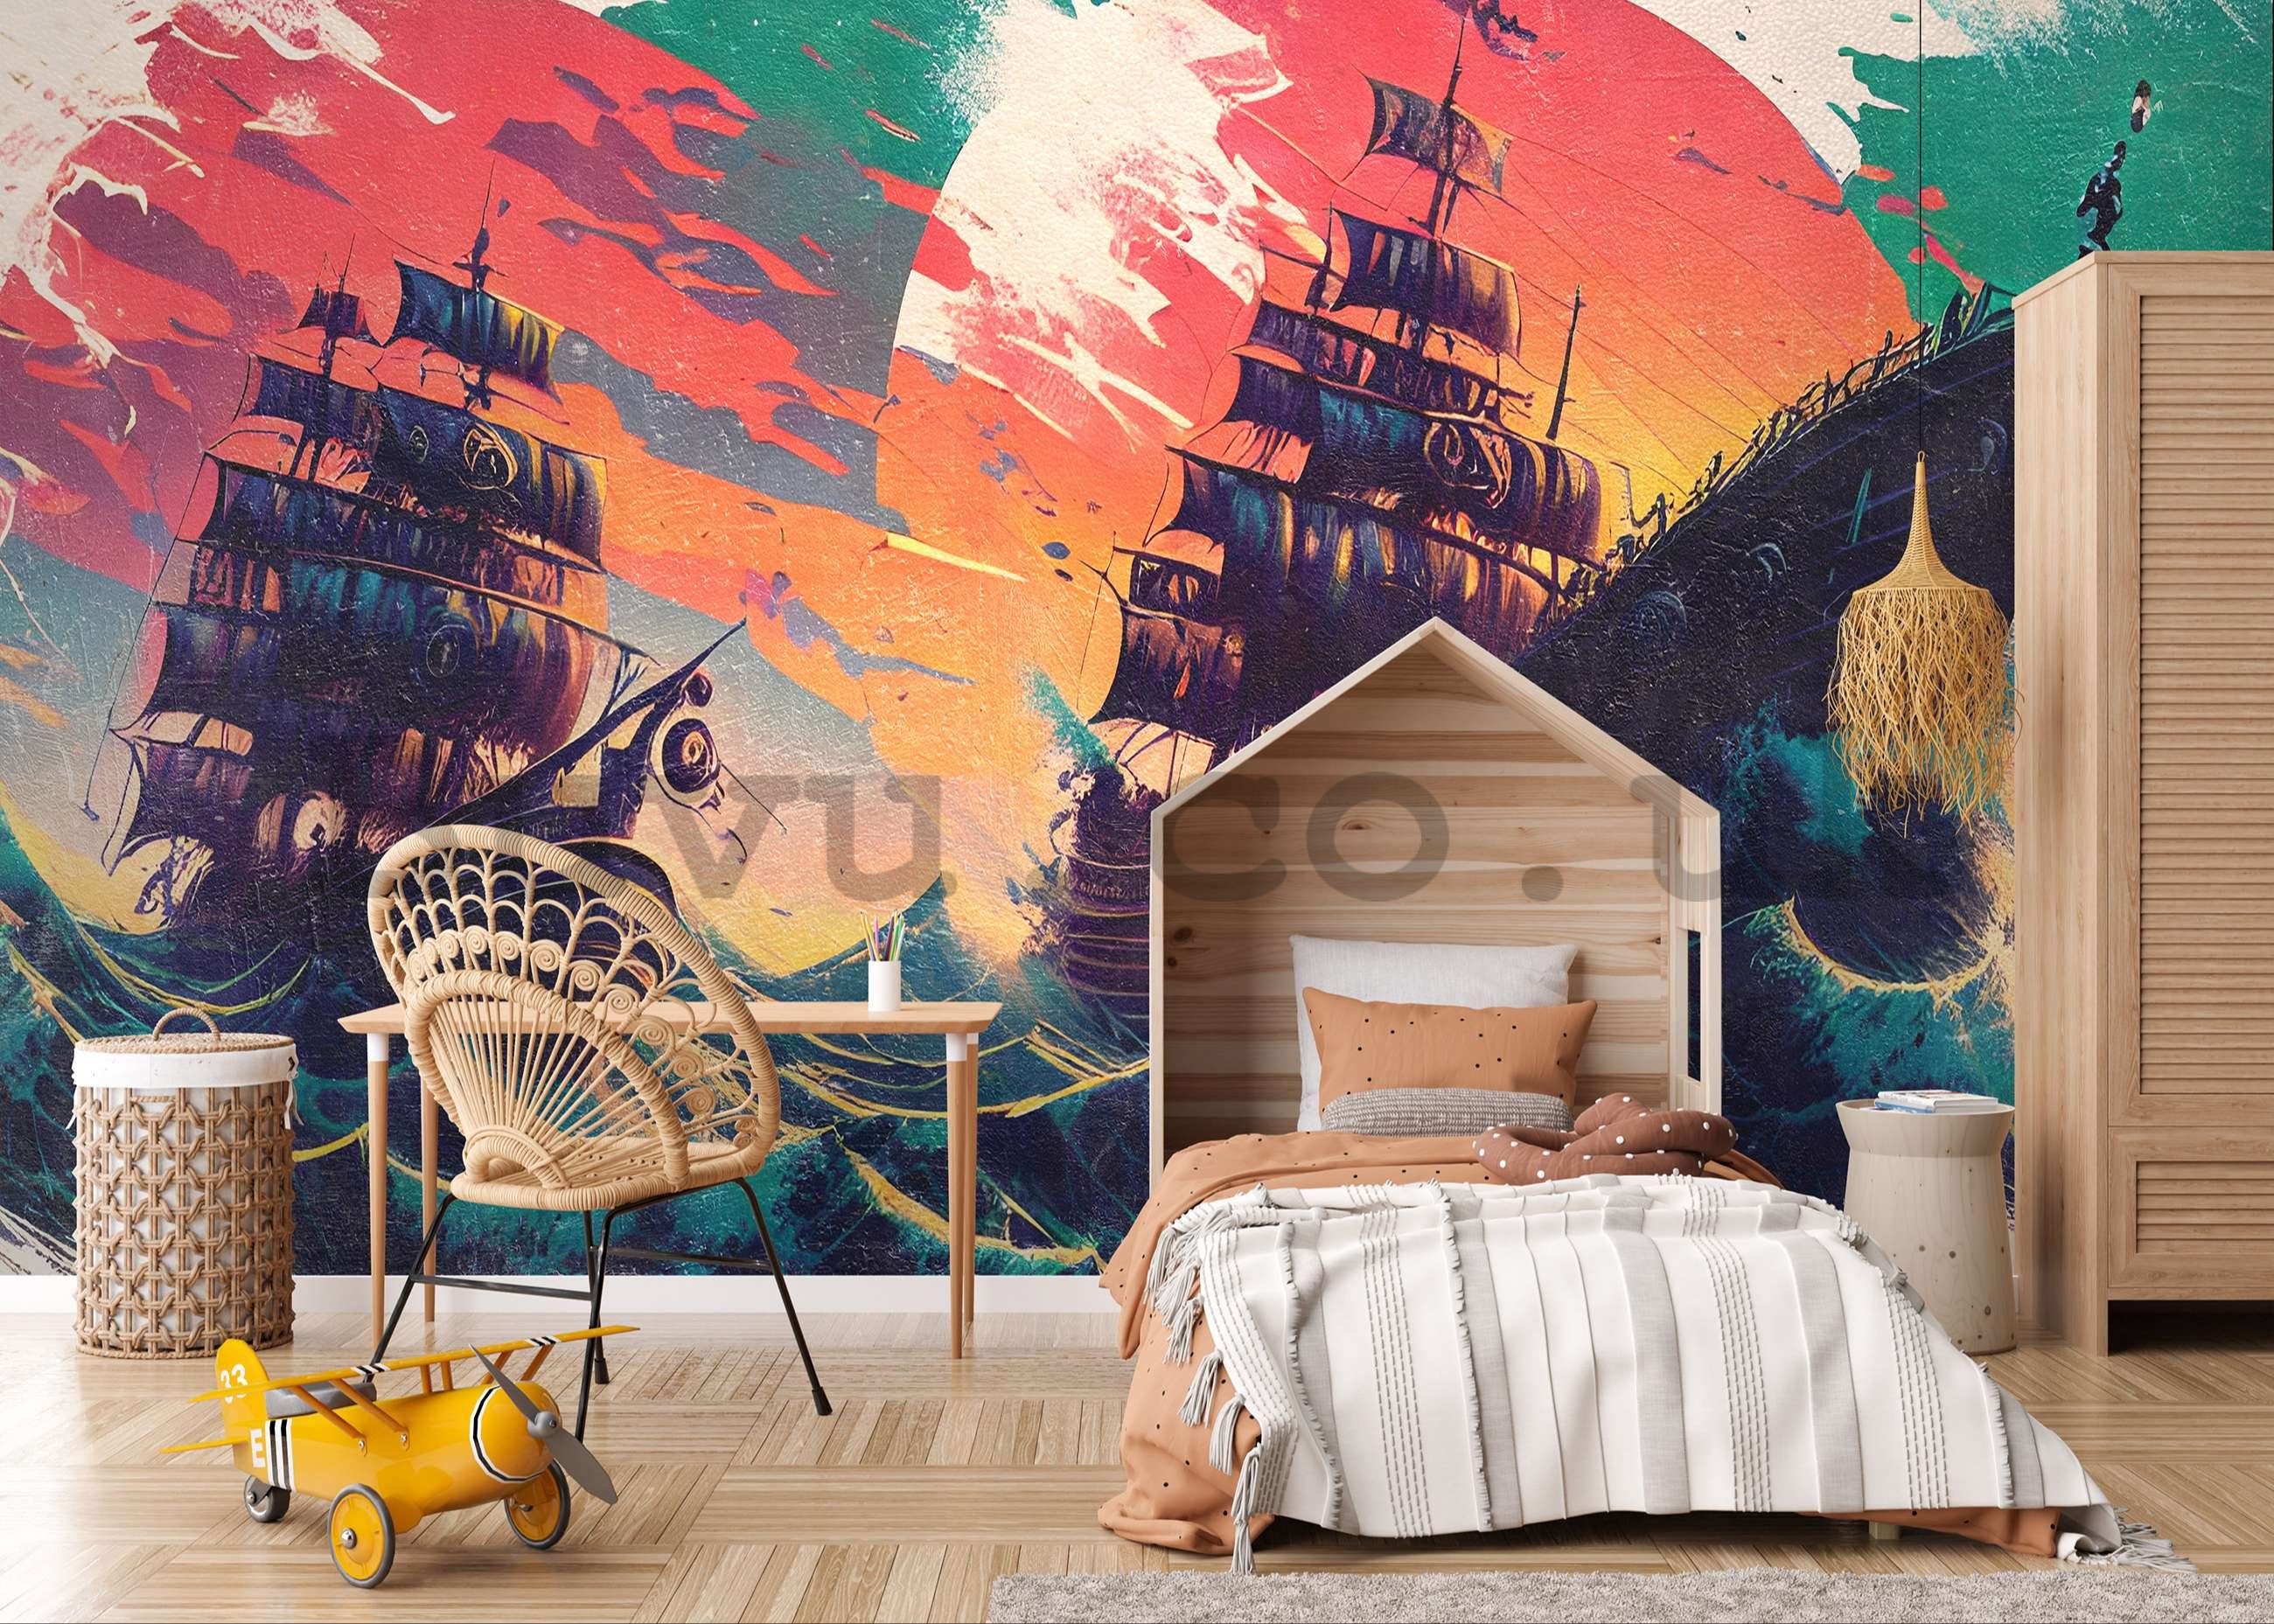 Wall mural vlies: Pirate galleons - 254x184 cm